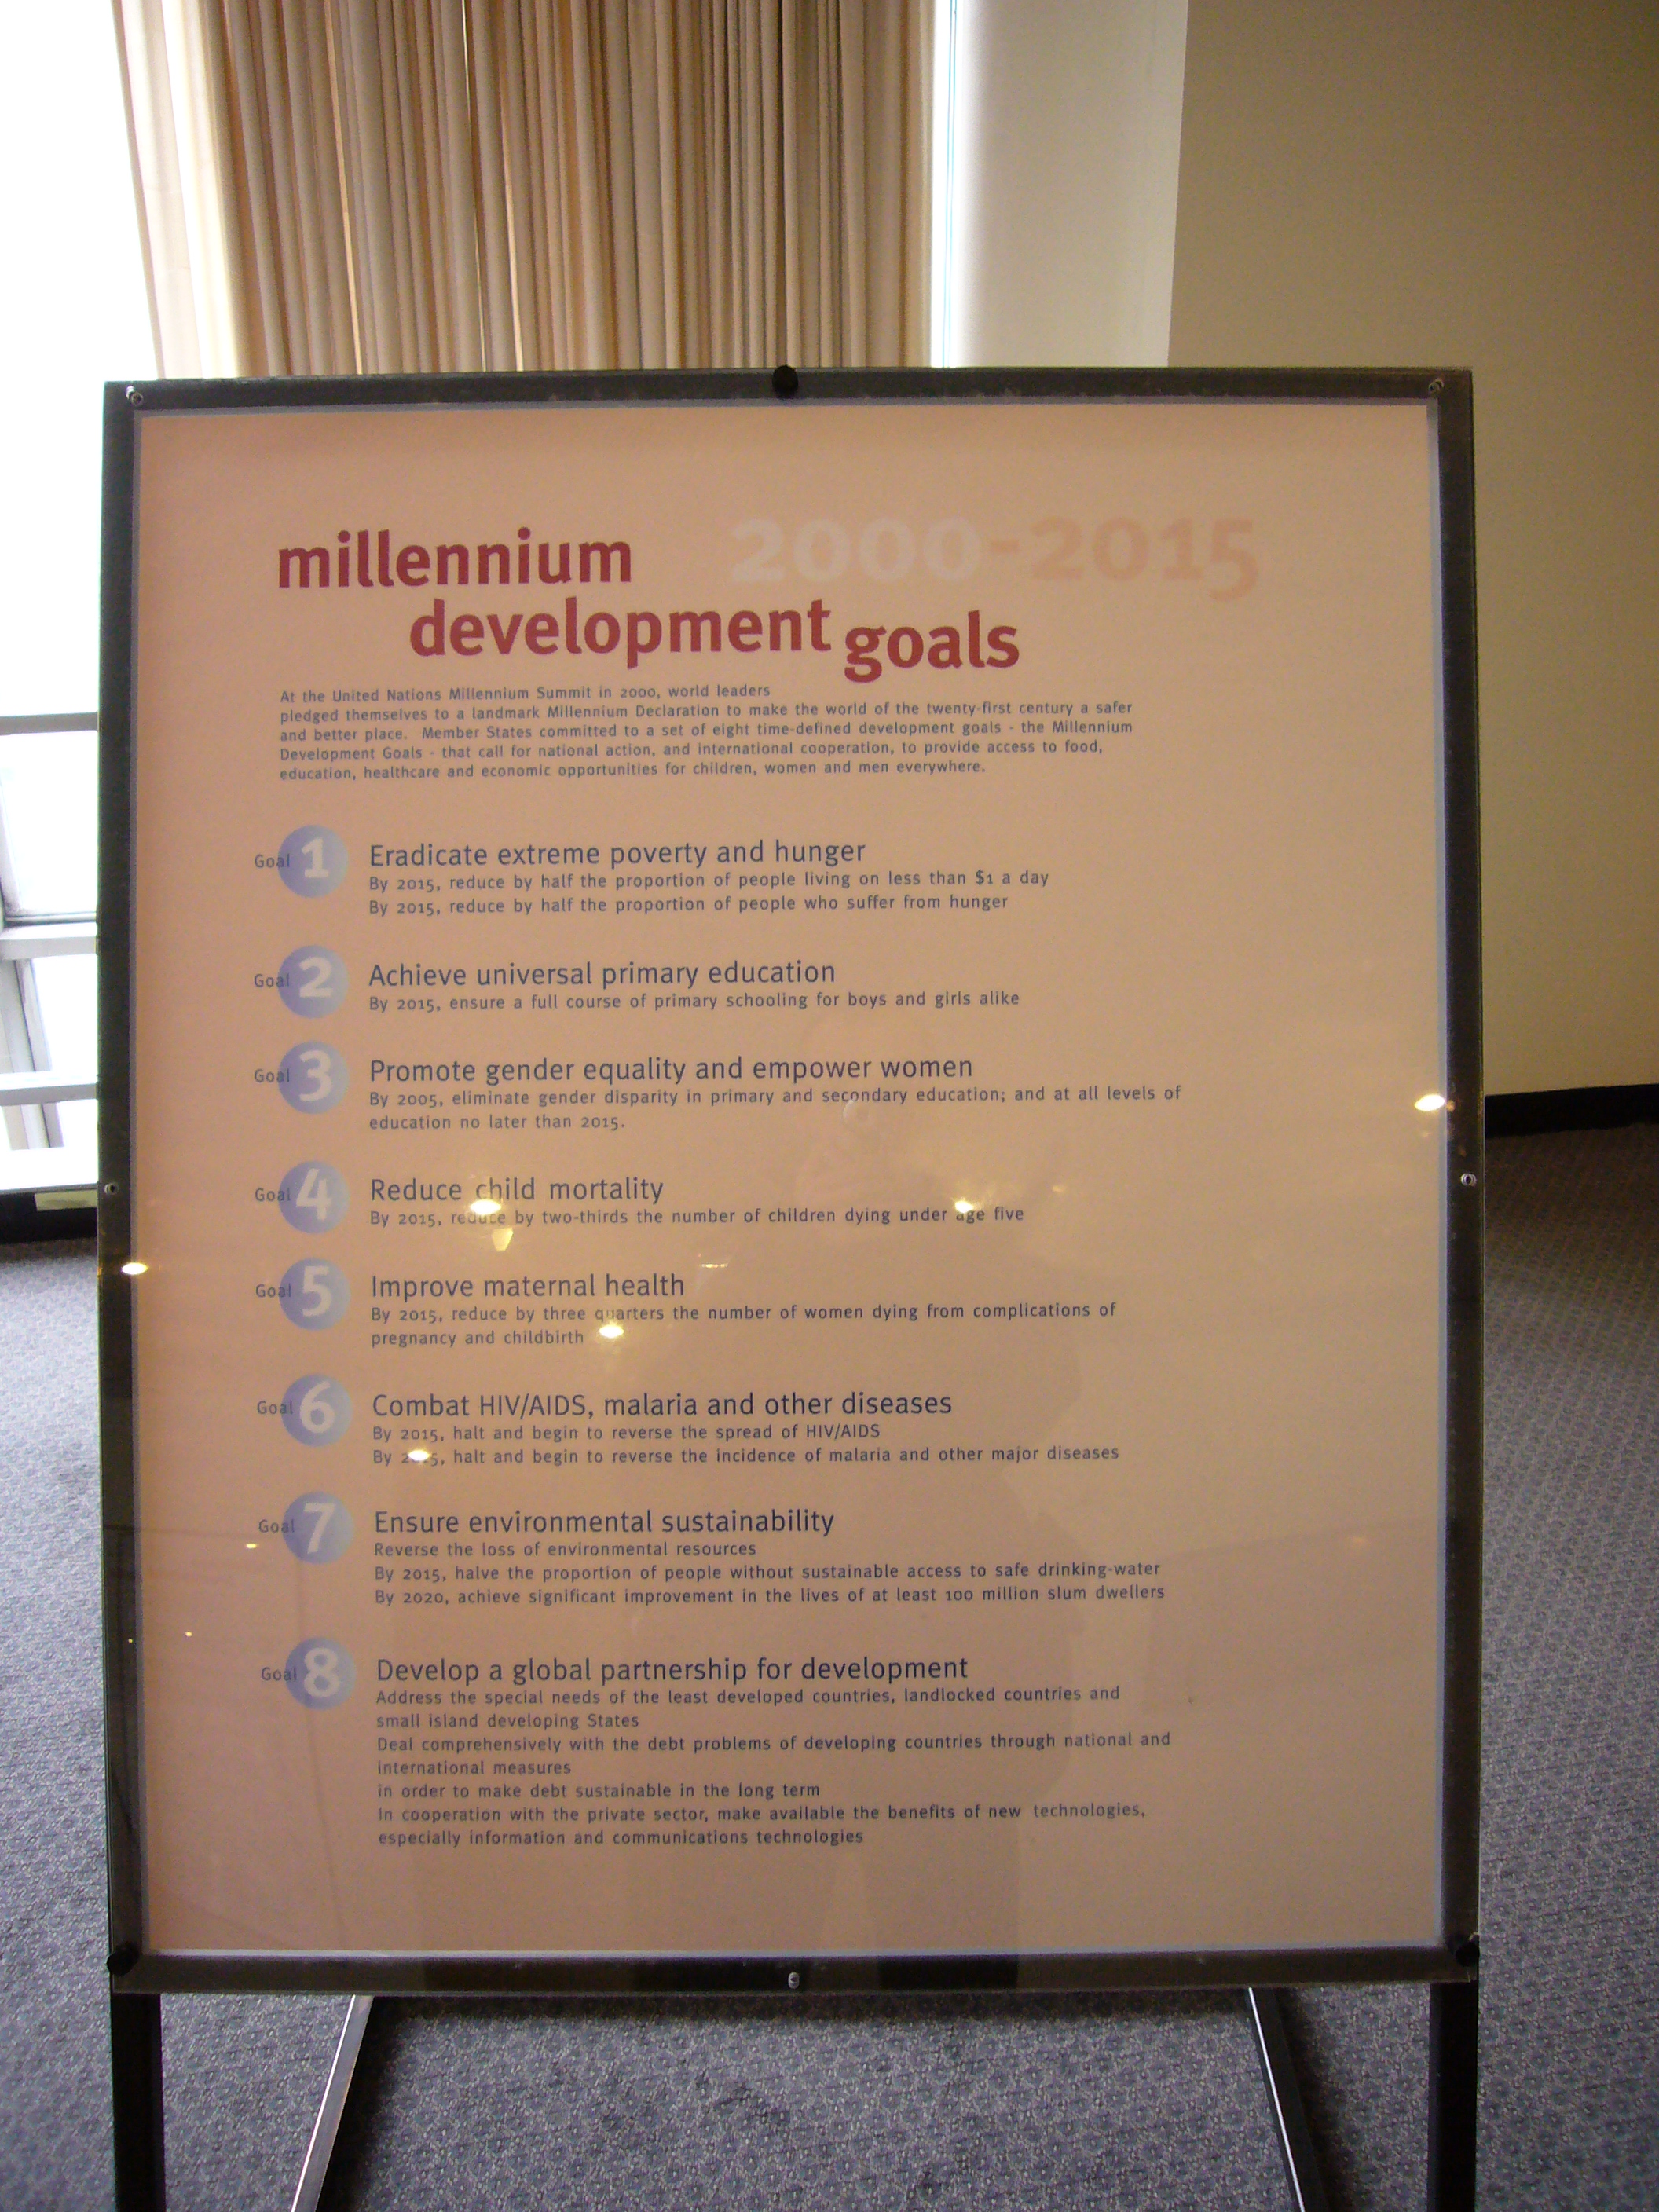 millennium development goals - wikiwand